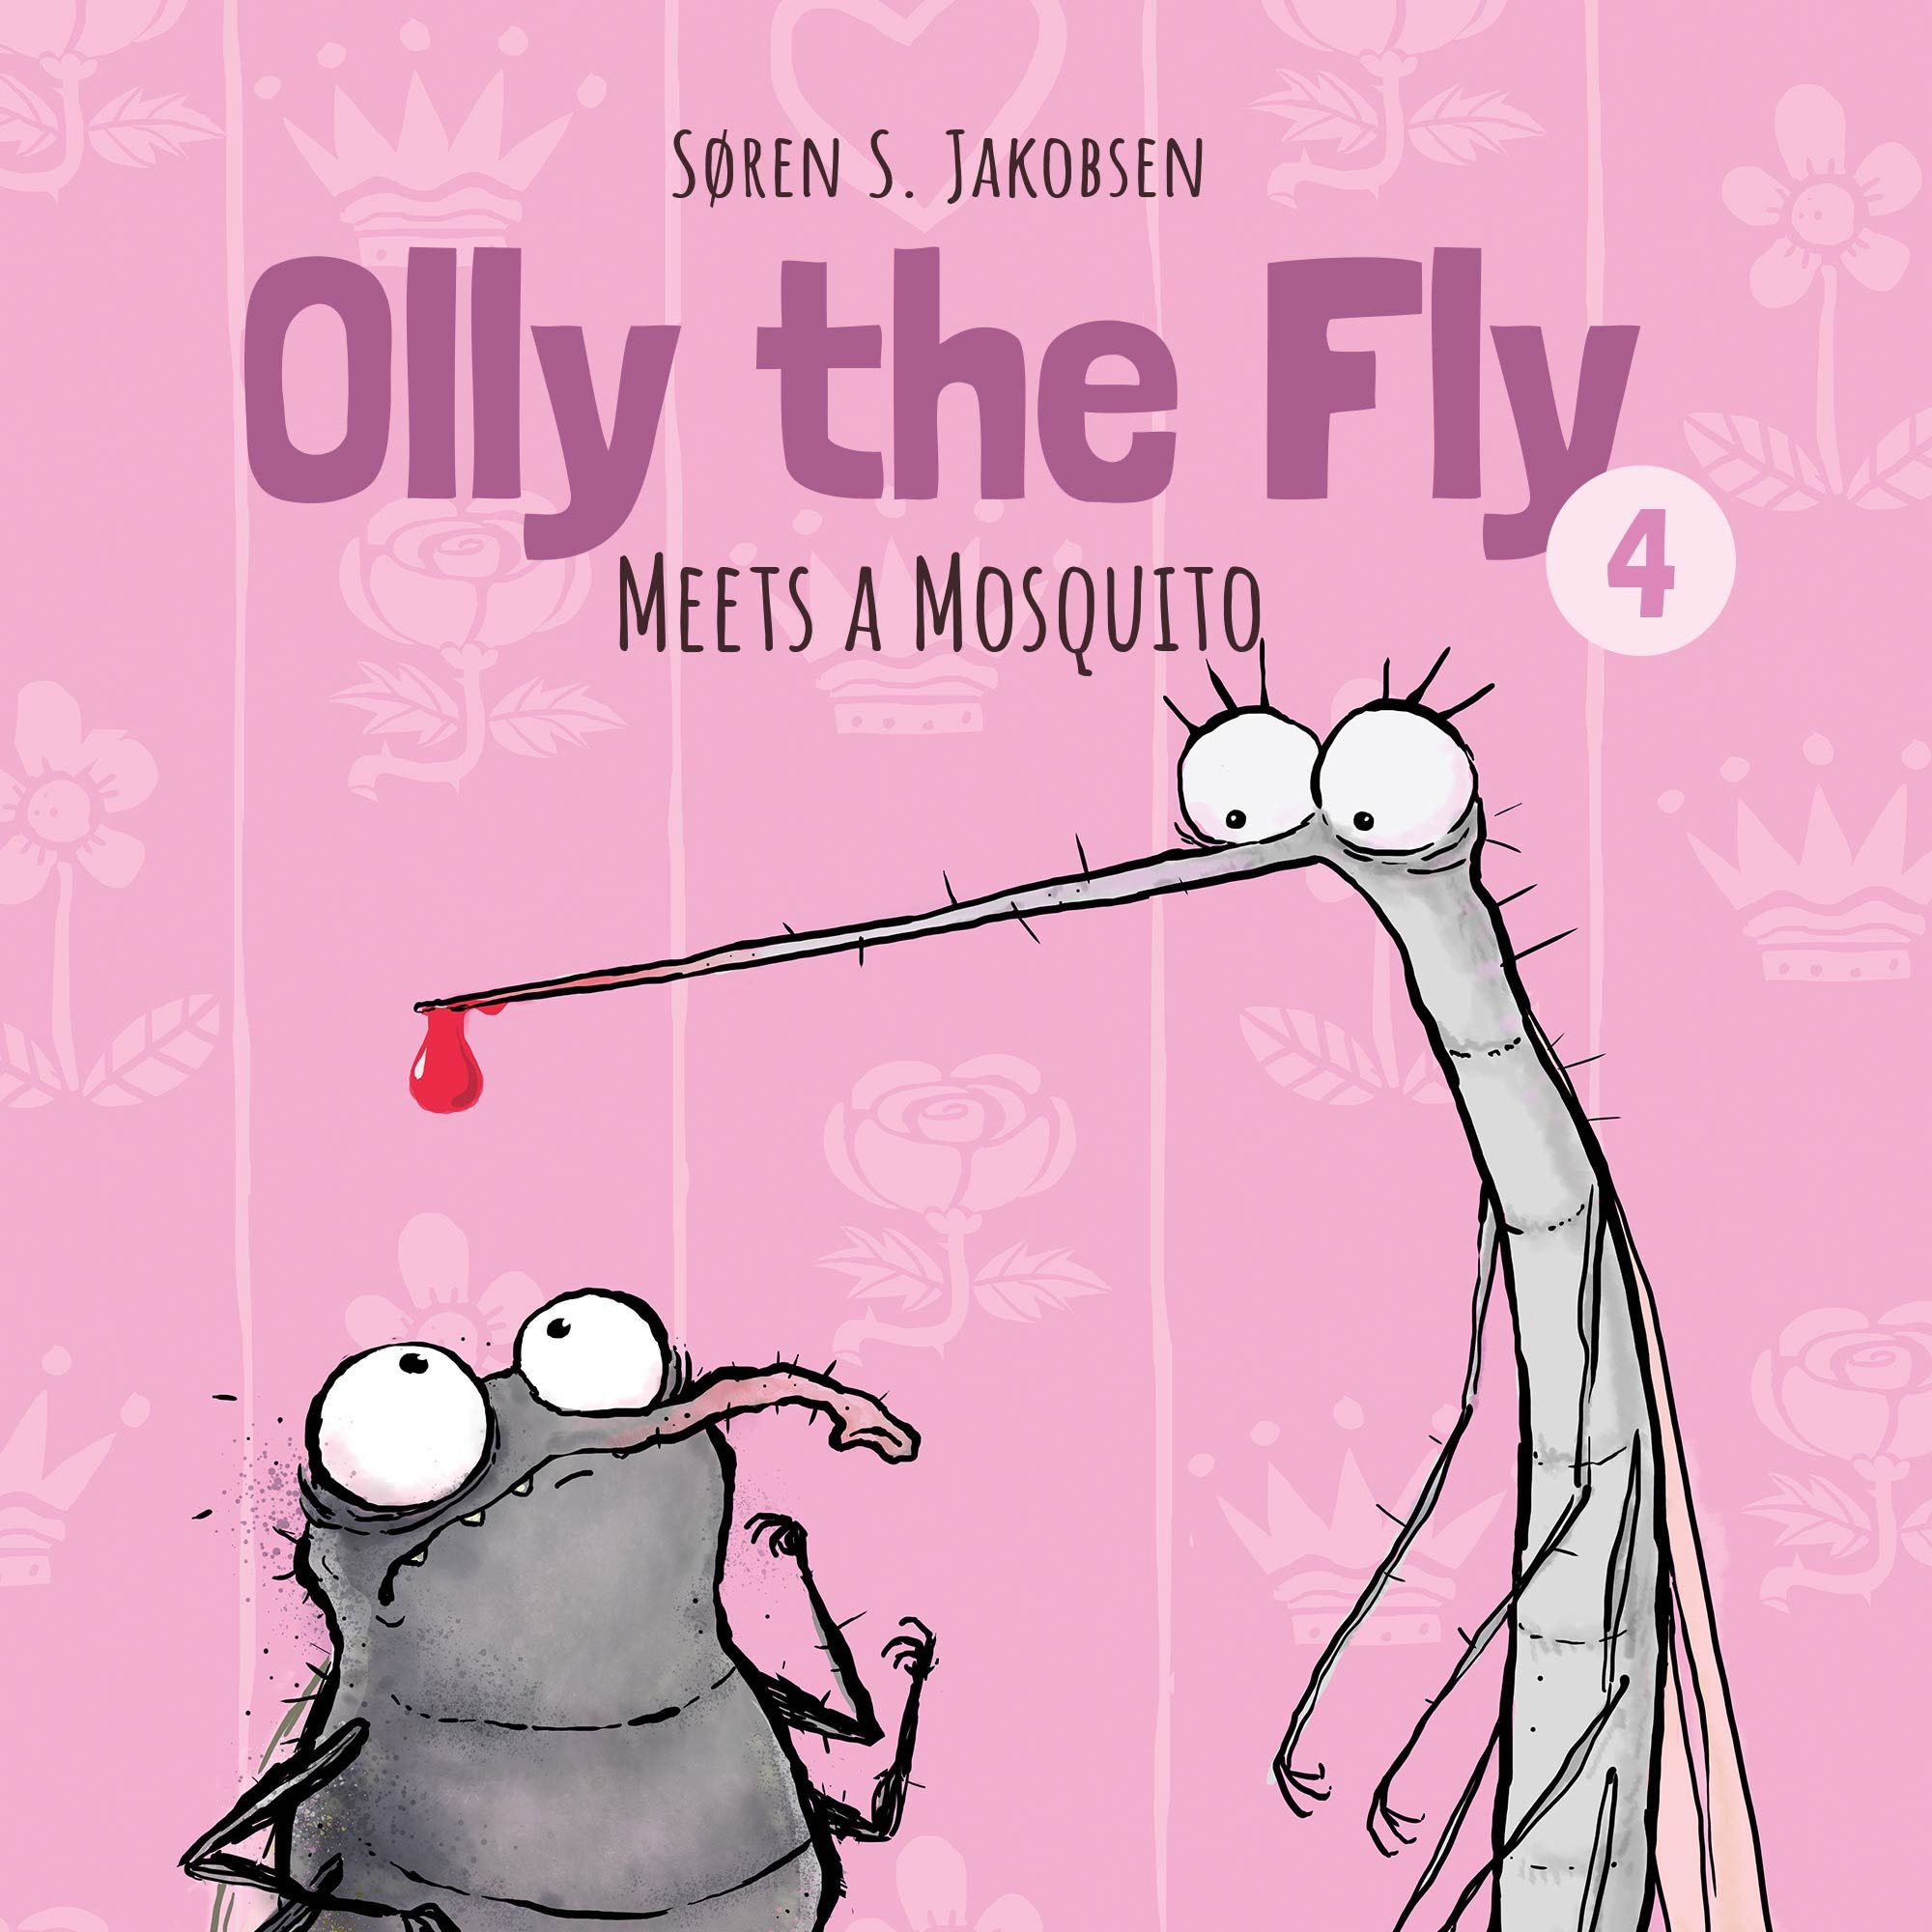 Olly the Fly #4: Olly the Fly Meets a Mosquito, ljudbok av Søren S. Jakobsen